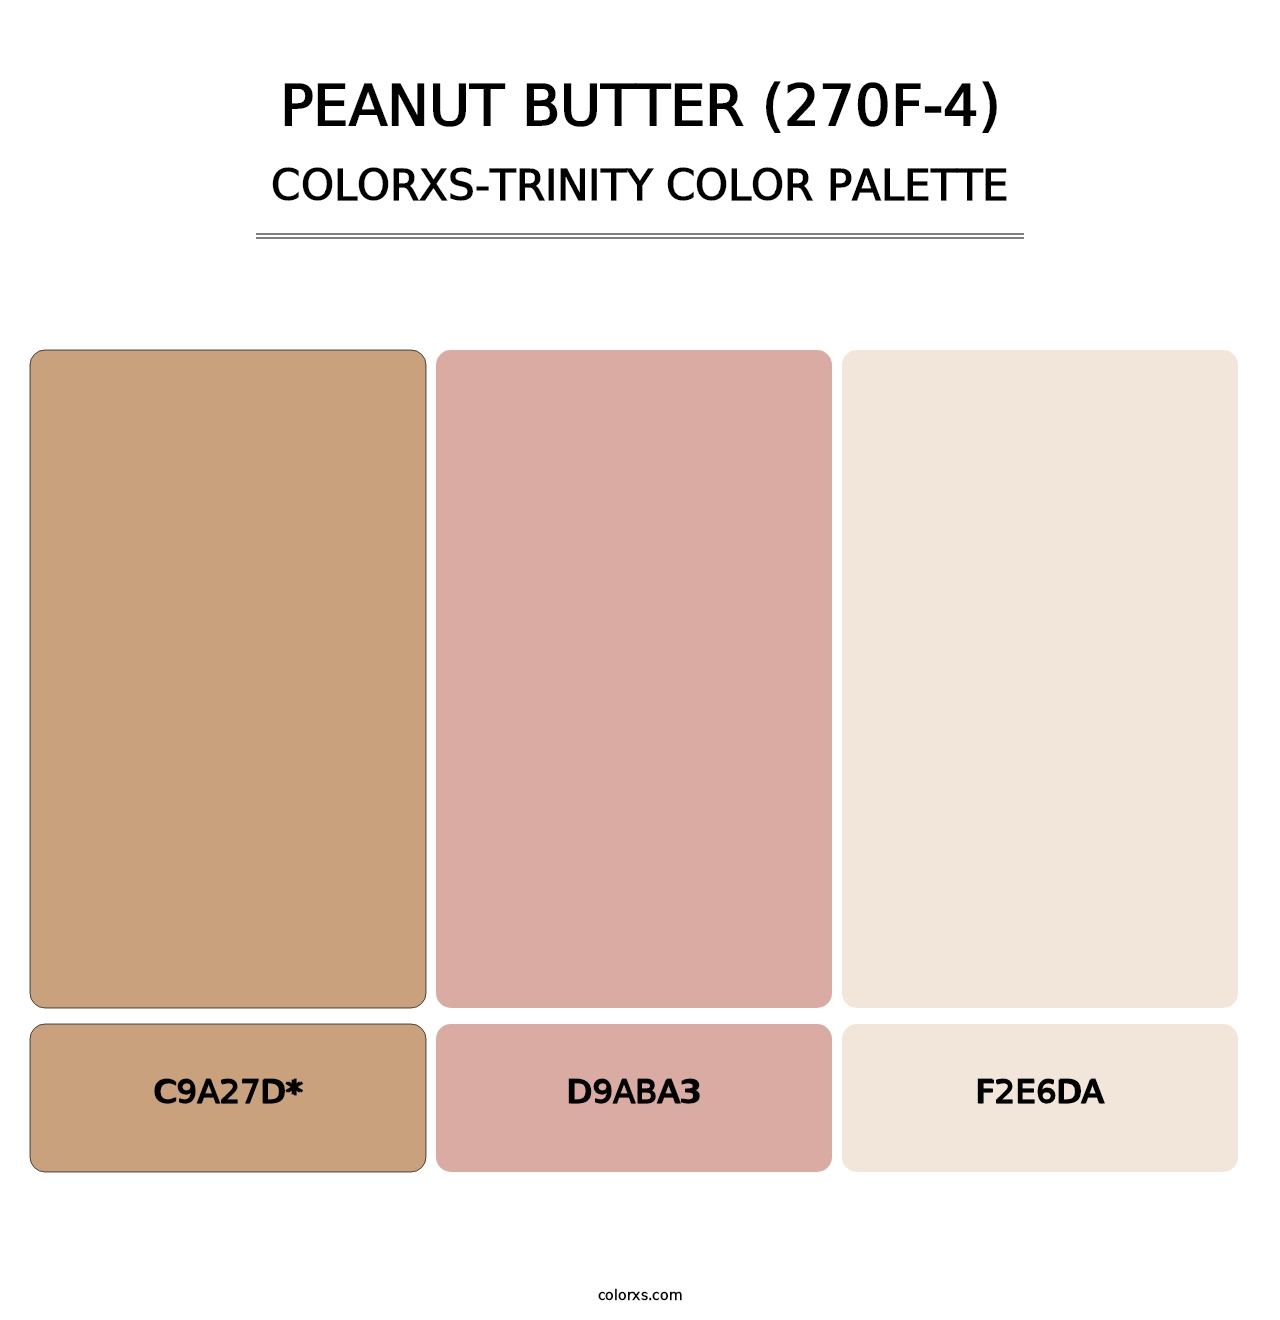 Peanut Butter (270F-4) - Colorxs Trinity Palette